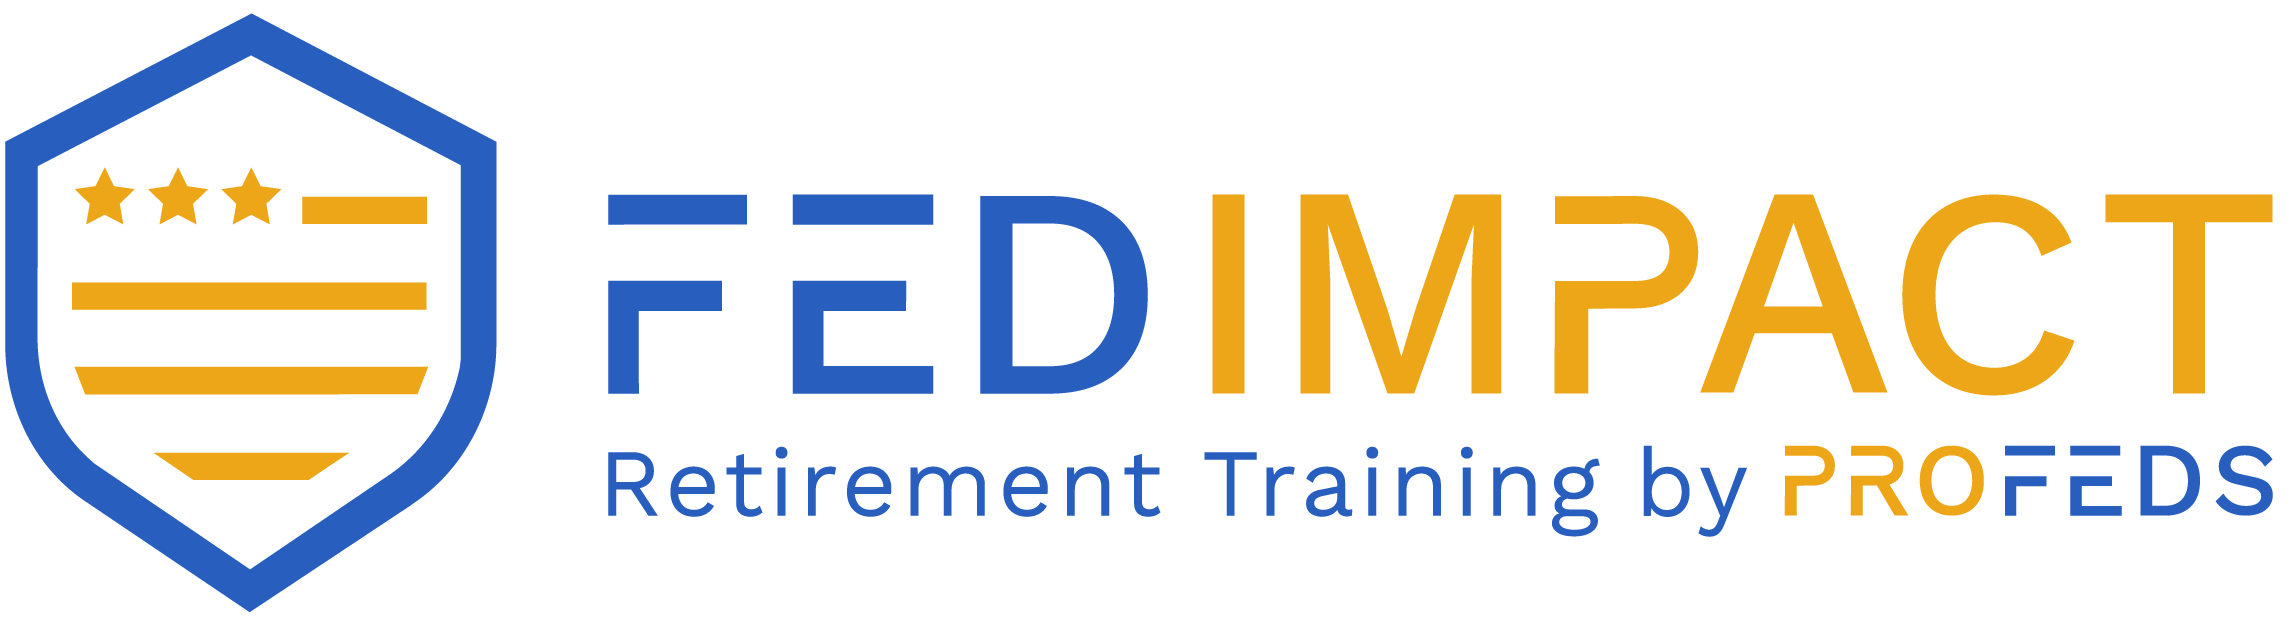 FedImpact - Federal Retirement Training CSRS/FERS